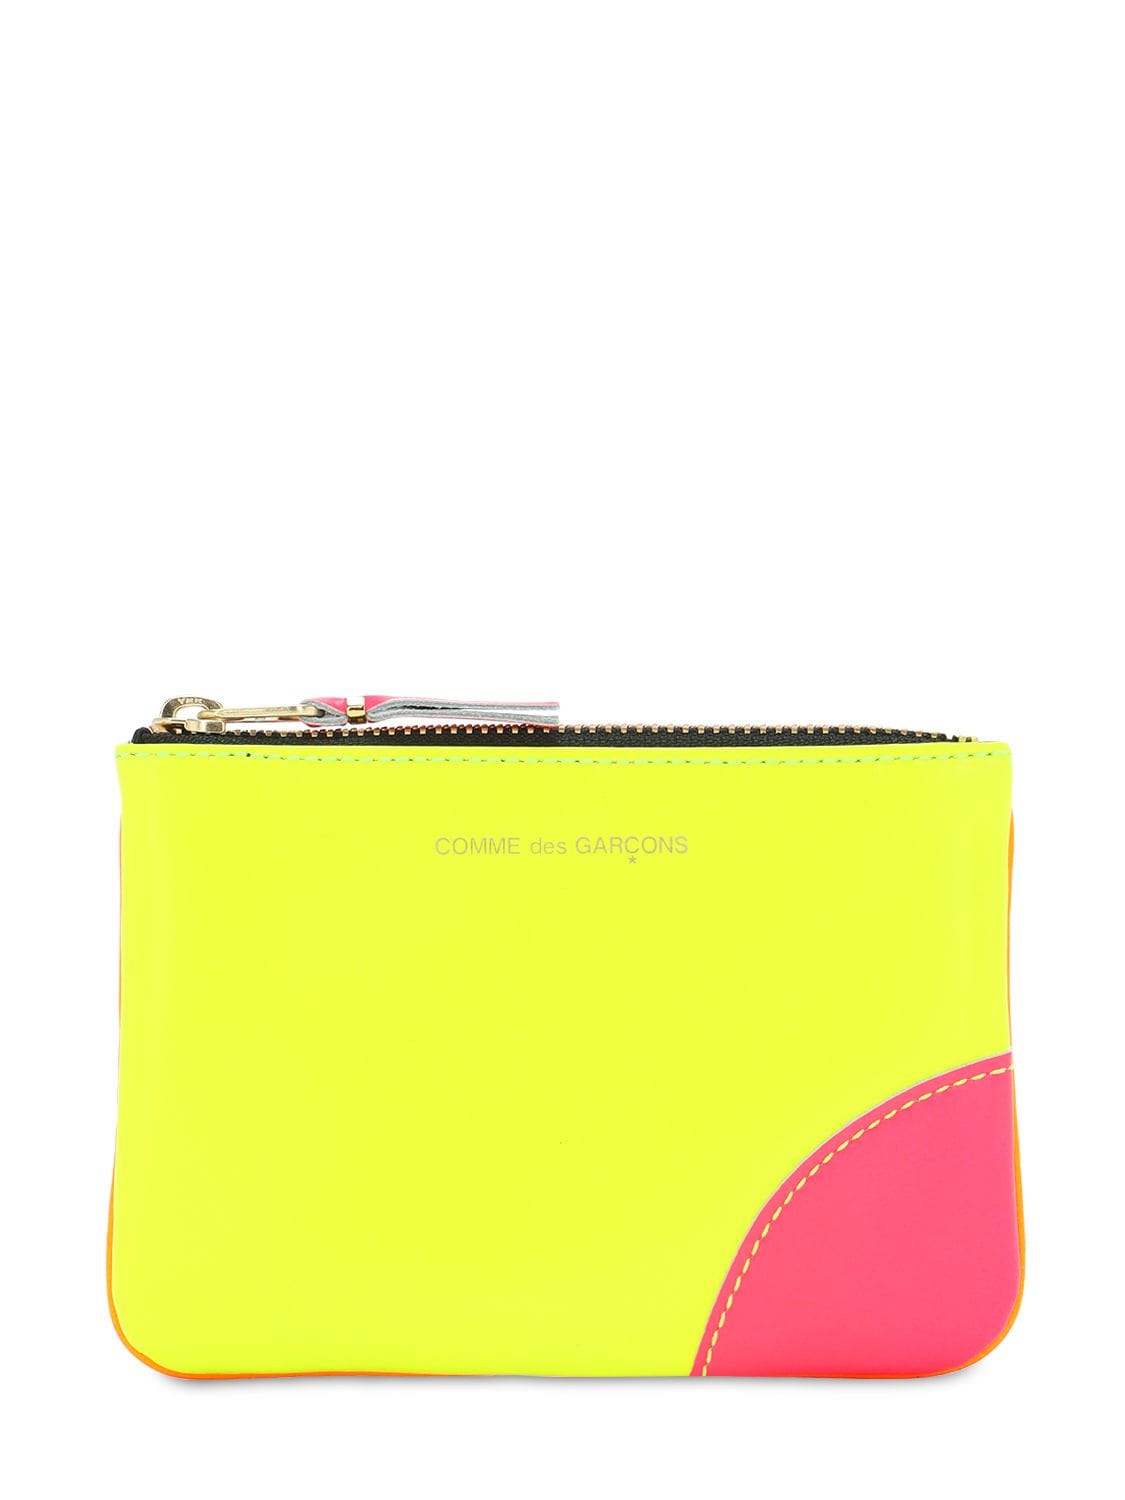 Comme Des Garçons Super Neon Leather Wallet In Yellow